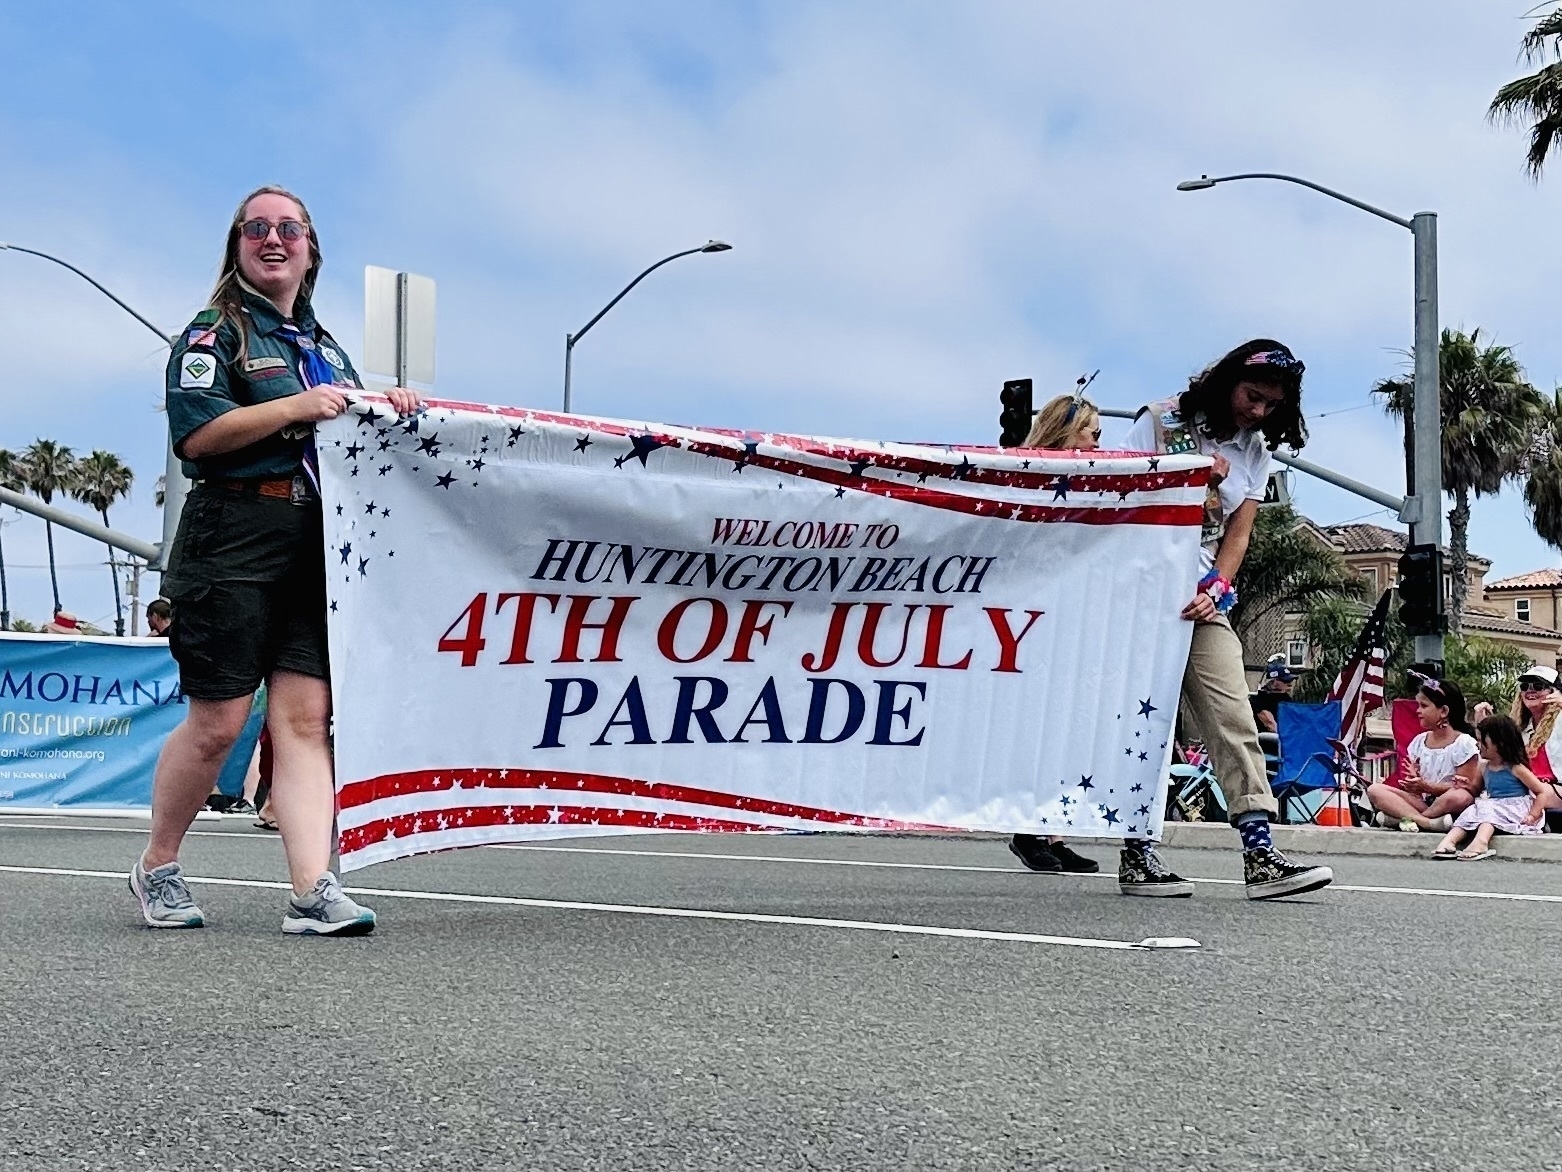 Huntington Beach 4th of July parade banner.